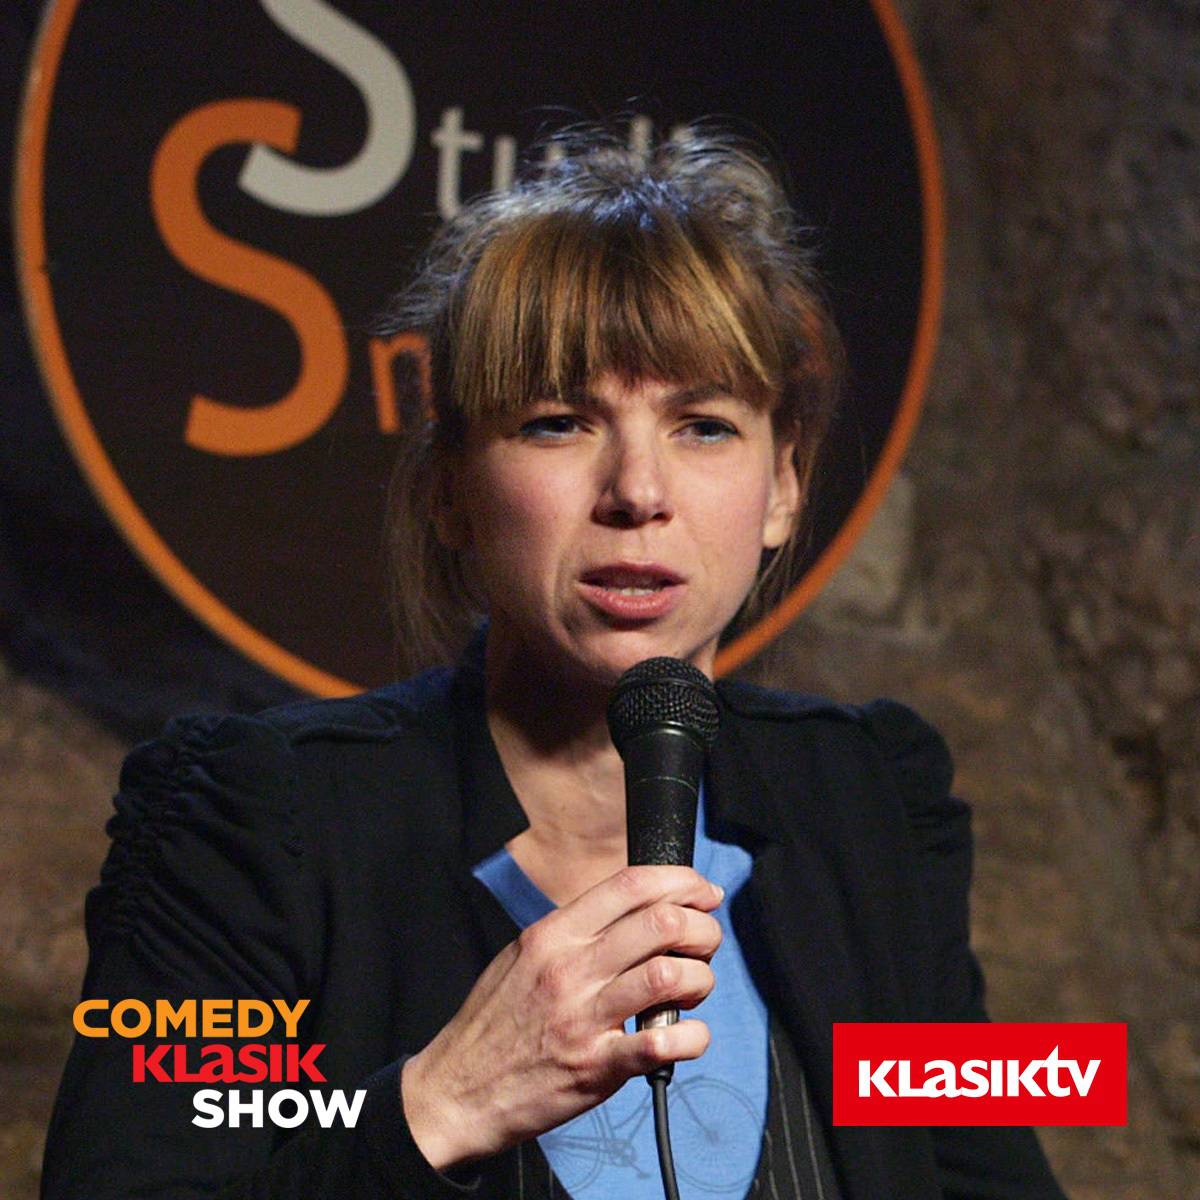 Comedy Klasik Show ide dalje: Čekaju vas nove doze smijeha